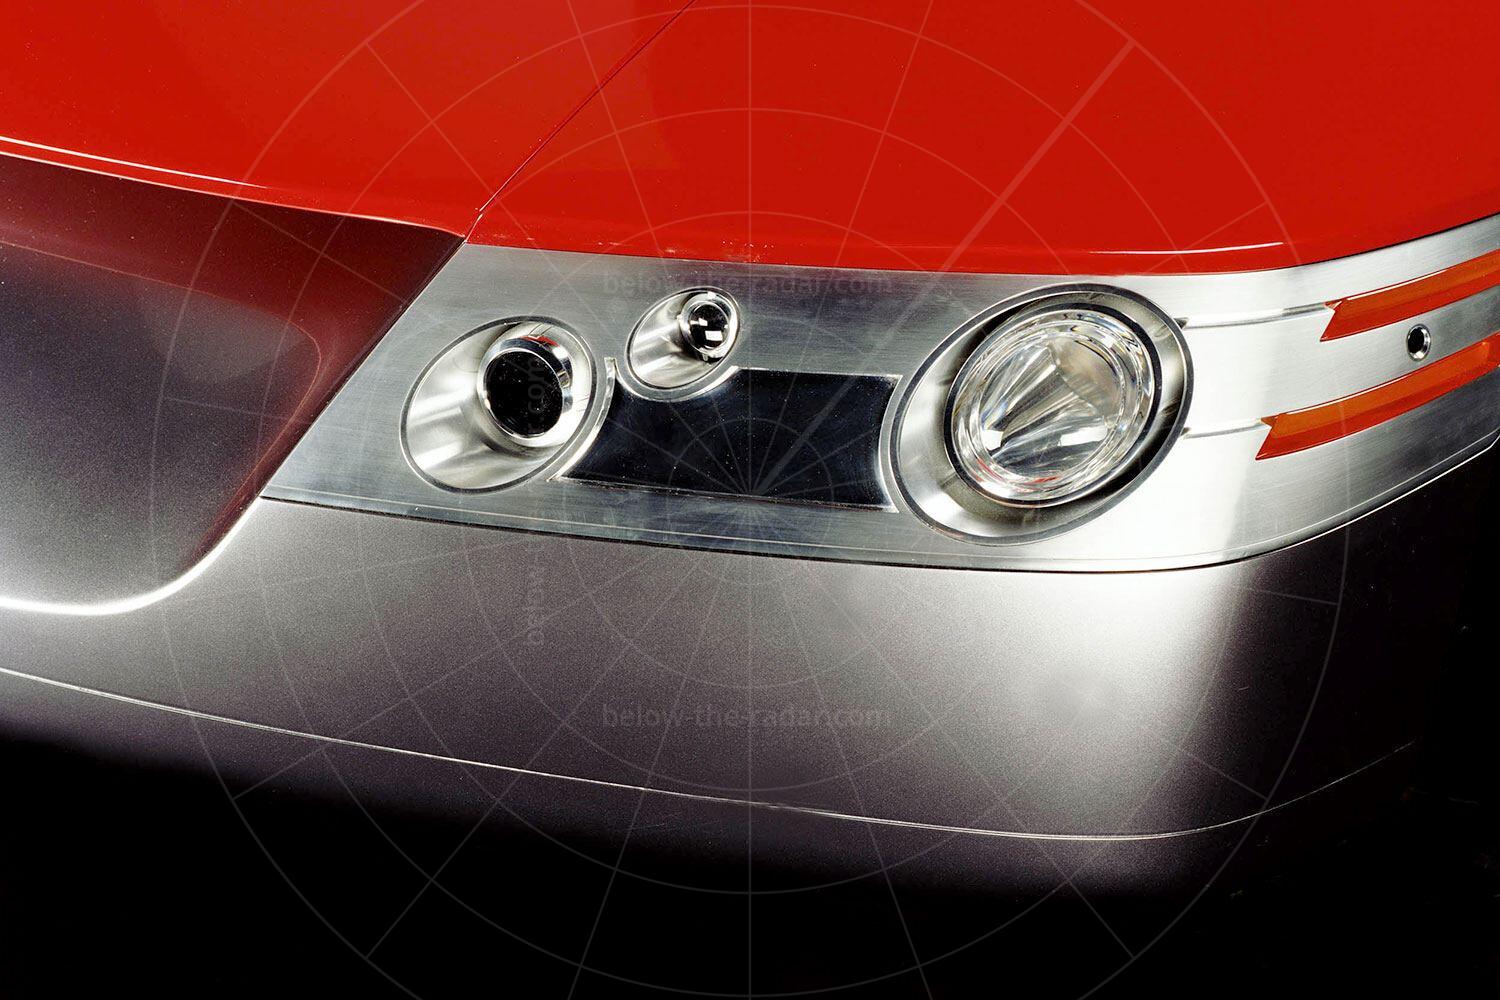 Acura DN-X concept lighting Pic: Acura | Acura DN-X concept lighting